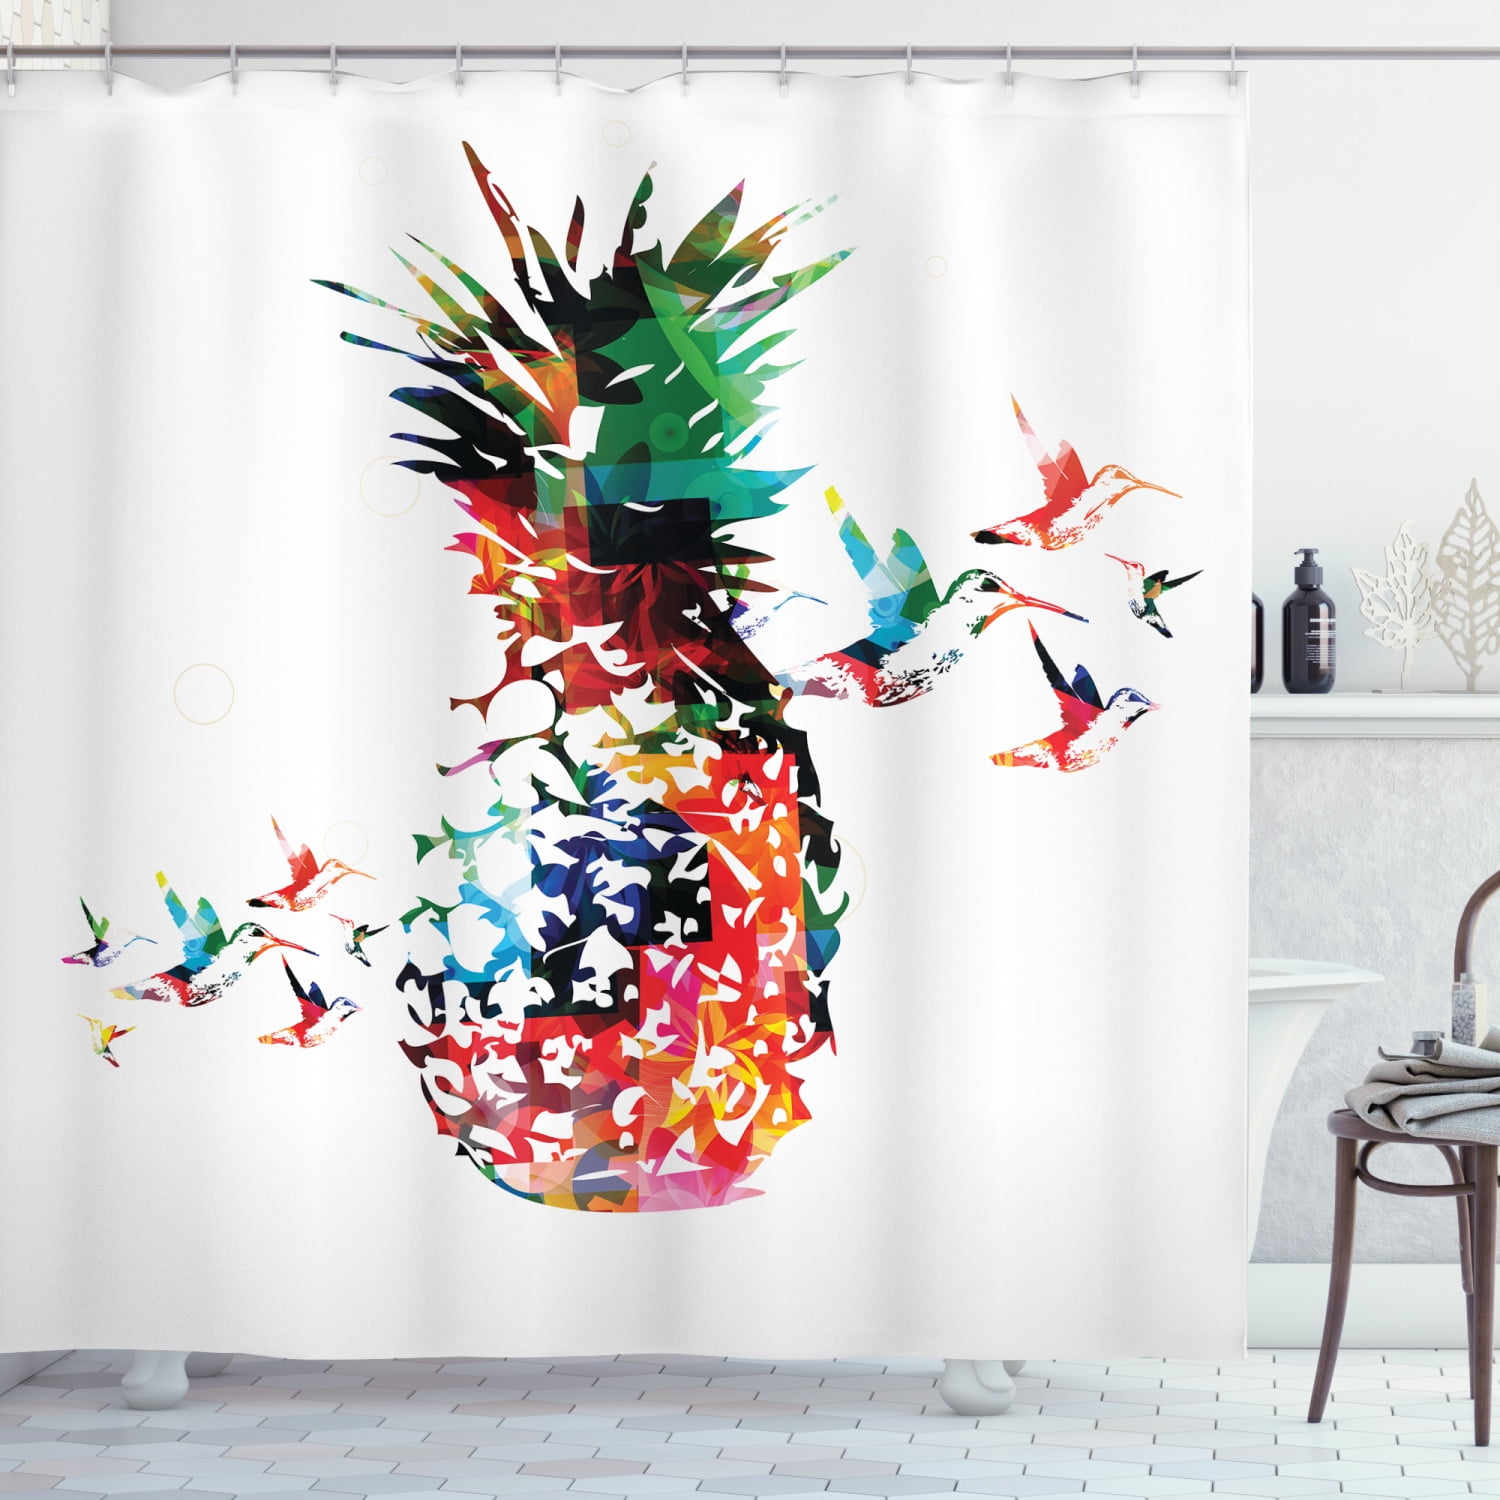 Fabric Bath Curtain Animal Bird Colorful Parrot Shower Curtain with Bath Rugs